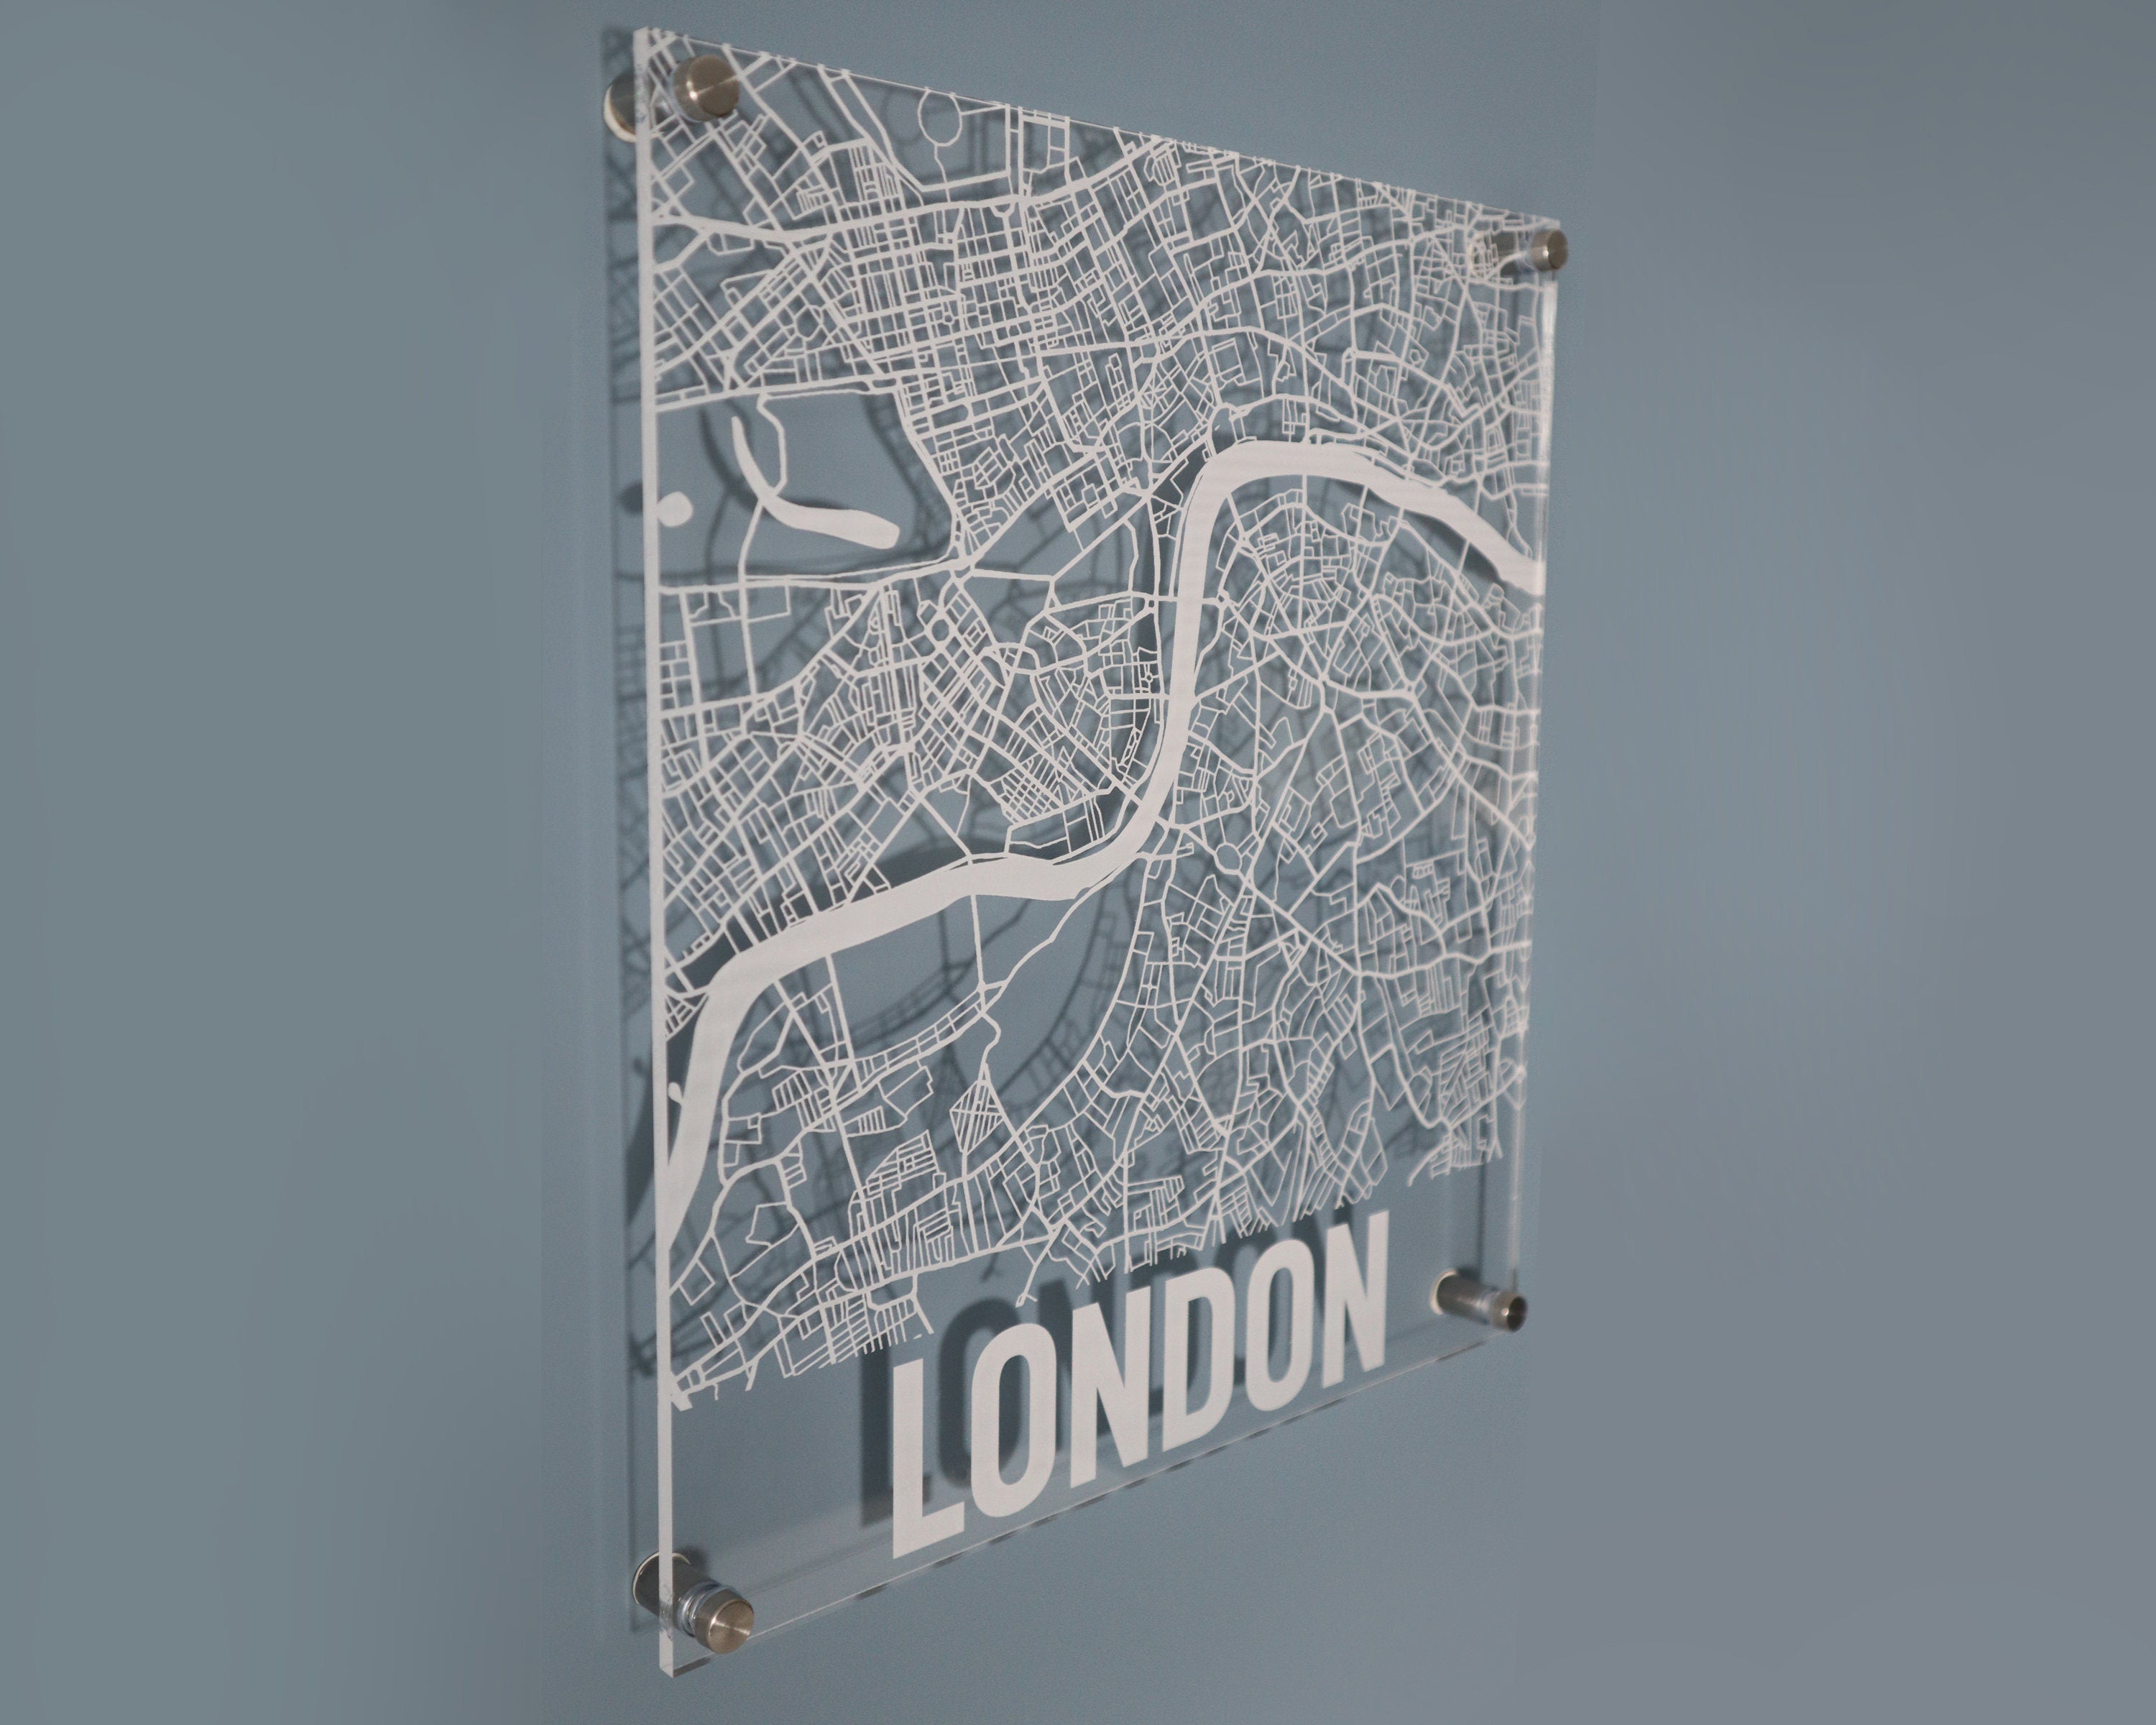 Engraved London City Wall Art Map